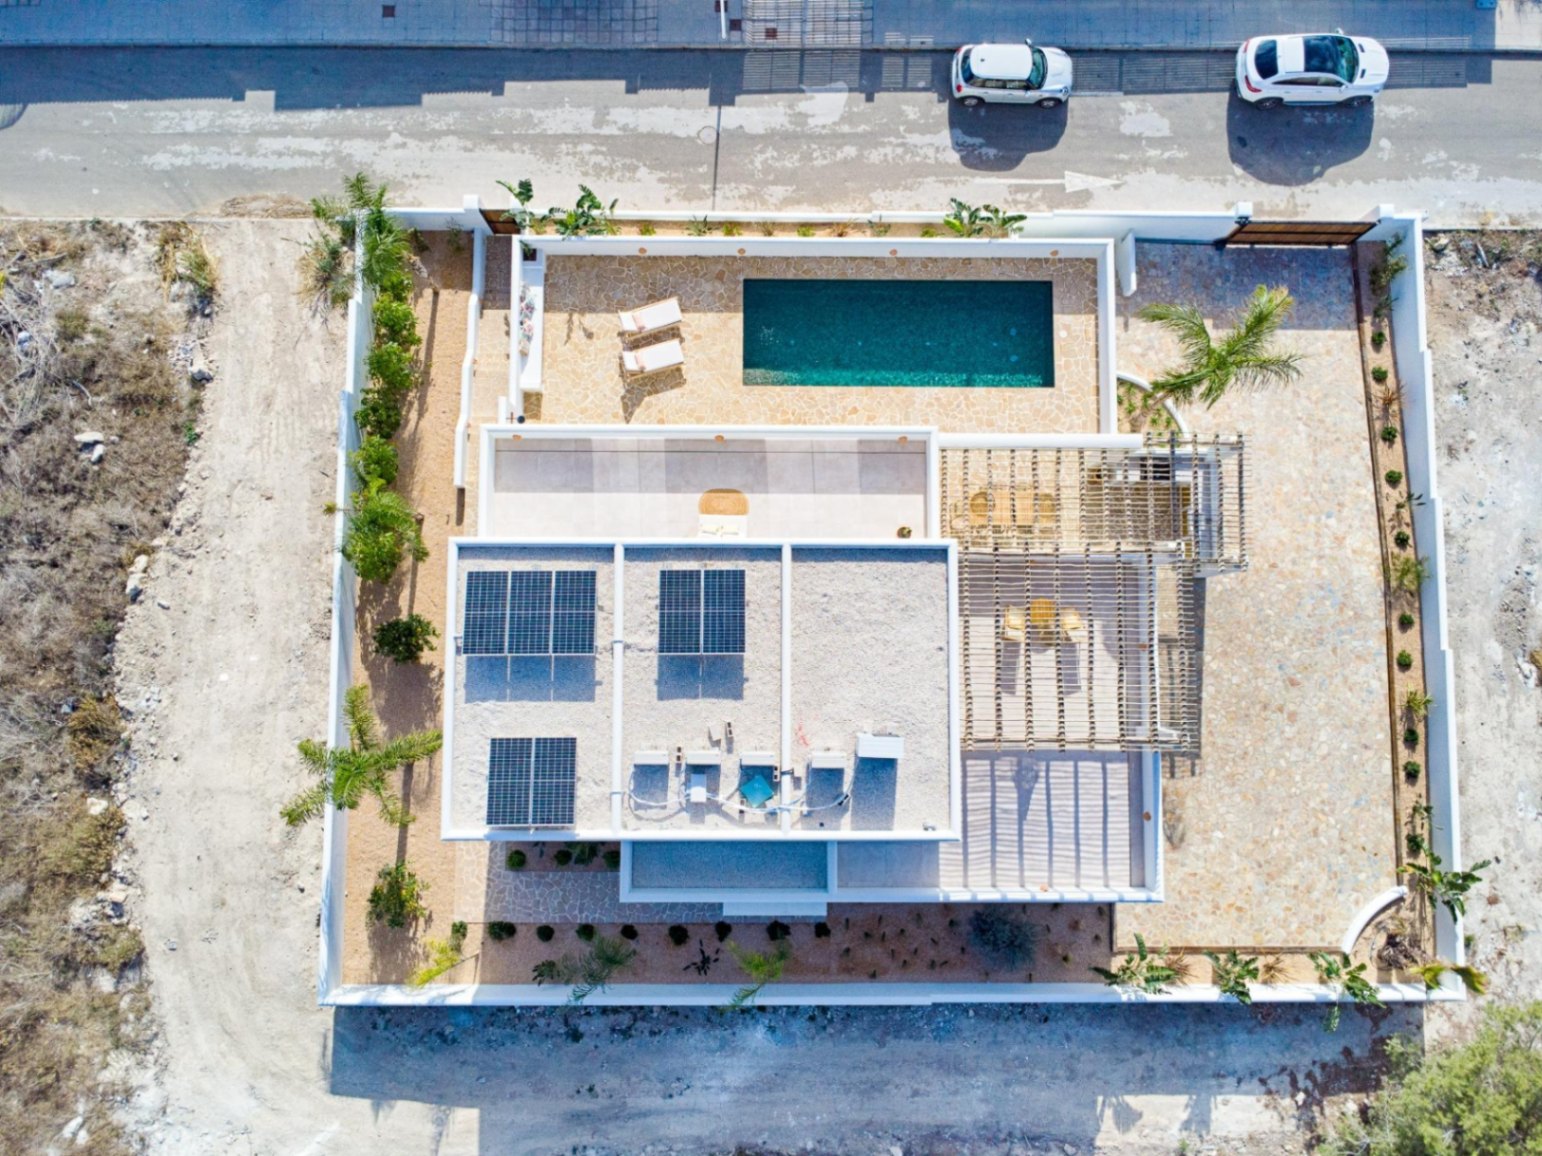 Villa im Ibiza-Stil zum Verkauf in Camarrocha Moraira, Costa Blanca